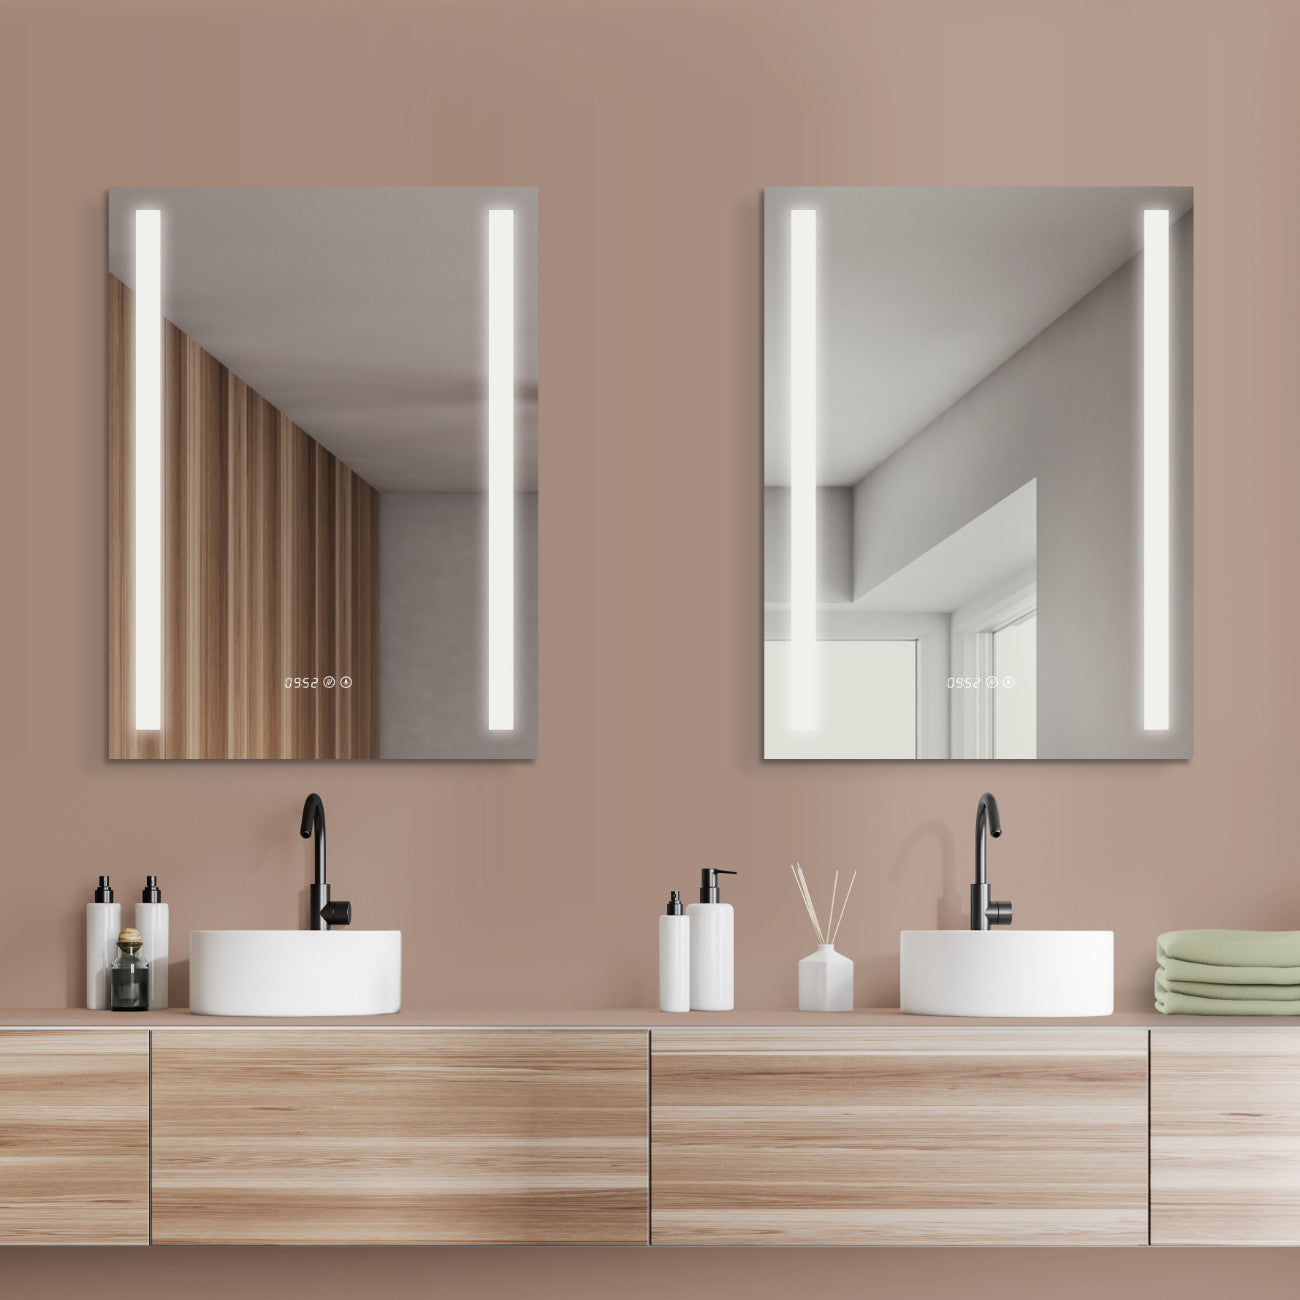 ANTI-FOG LED bathroom mirror with digital clock, light change warm white / cool white side light